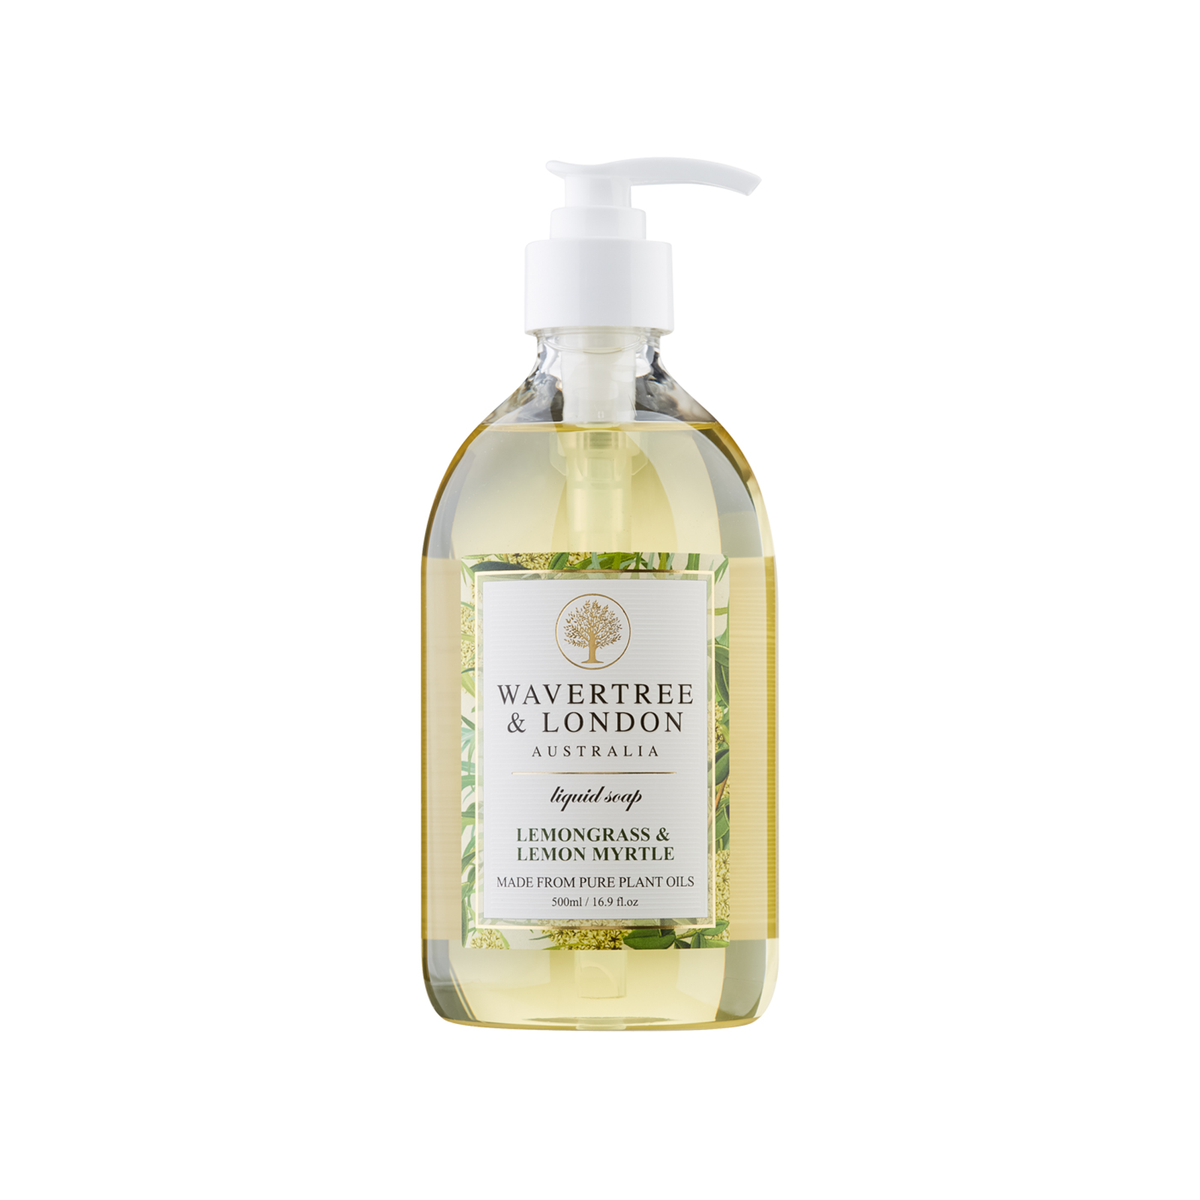 Wavertree & London "Lemongrass & Lemon Myrtle" Liquid Soap